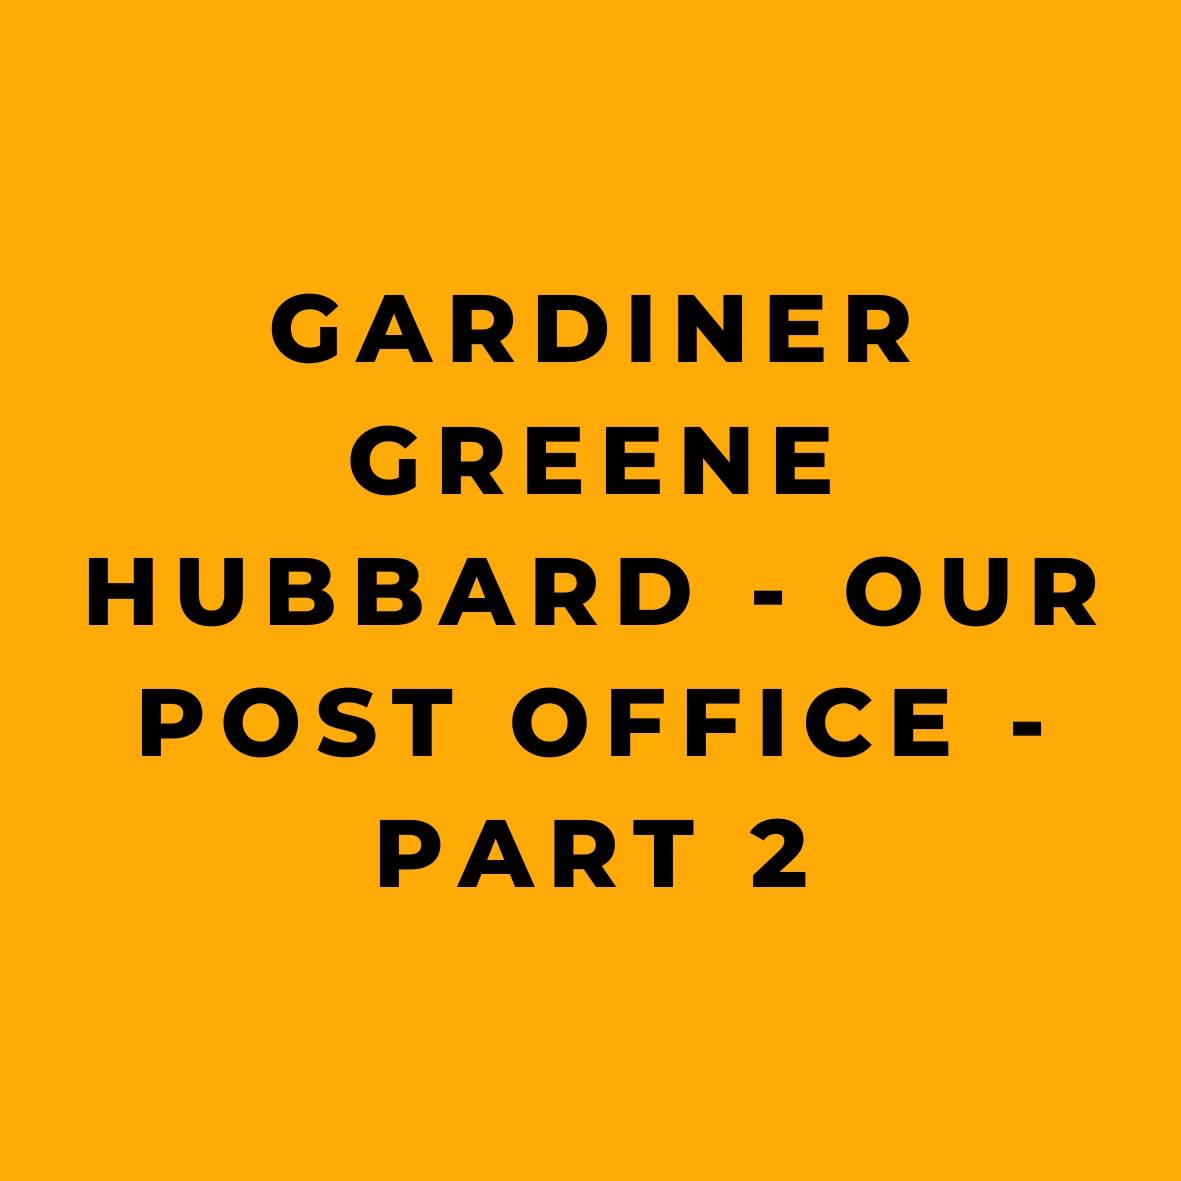 Gardiner Greene Hubbard - Our Post Office - Part 2